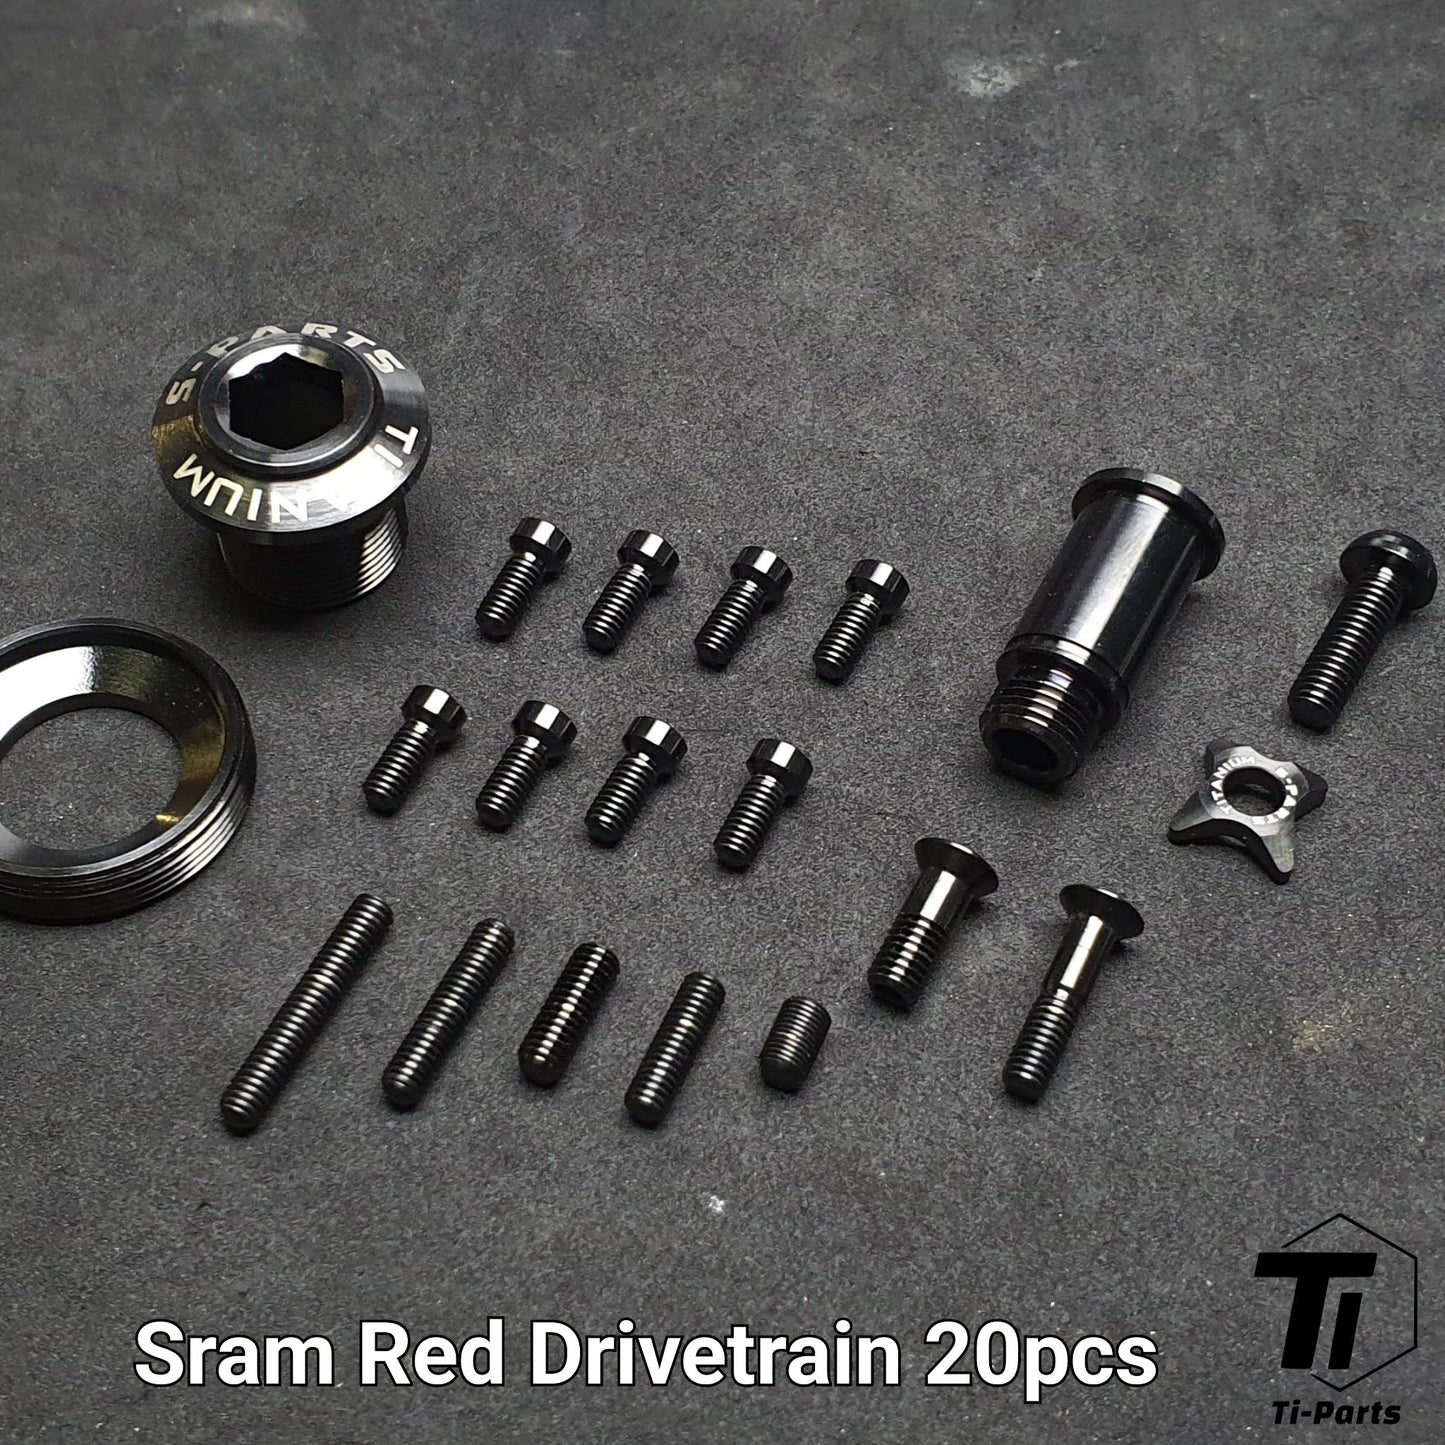 Titanium Sram Red Force Rival eTap AXS Full Upgrade Kit | 11s 12s Hydraulic Disc Brake Rim Brake Drivetrain Full Ti Upgrade | Grade 5 Titanium Singapore